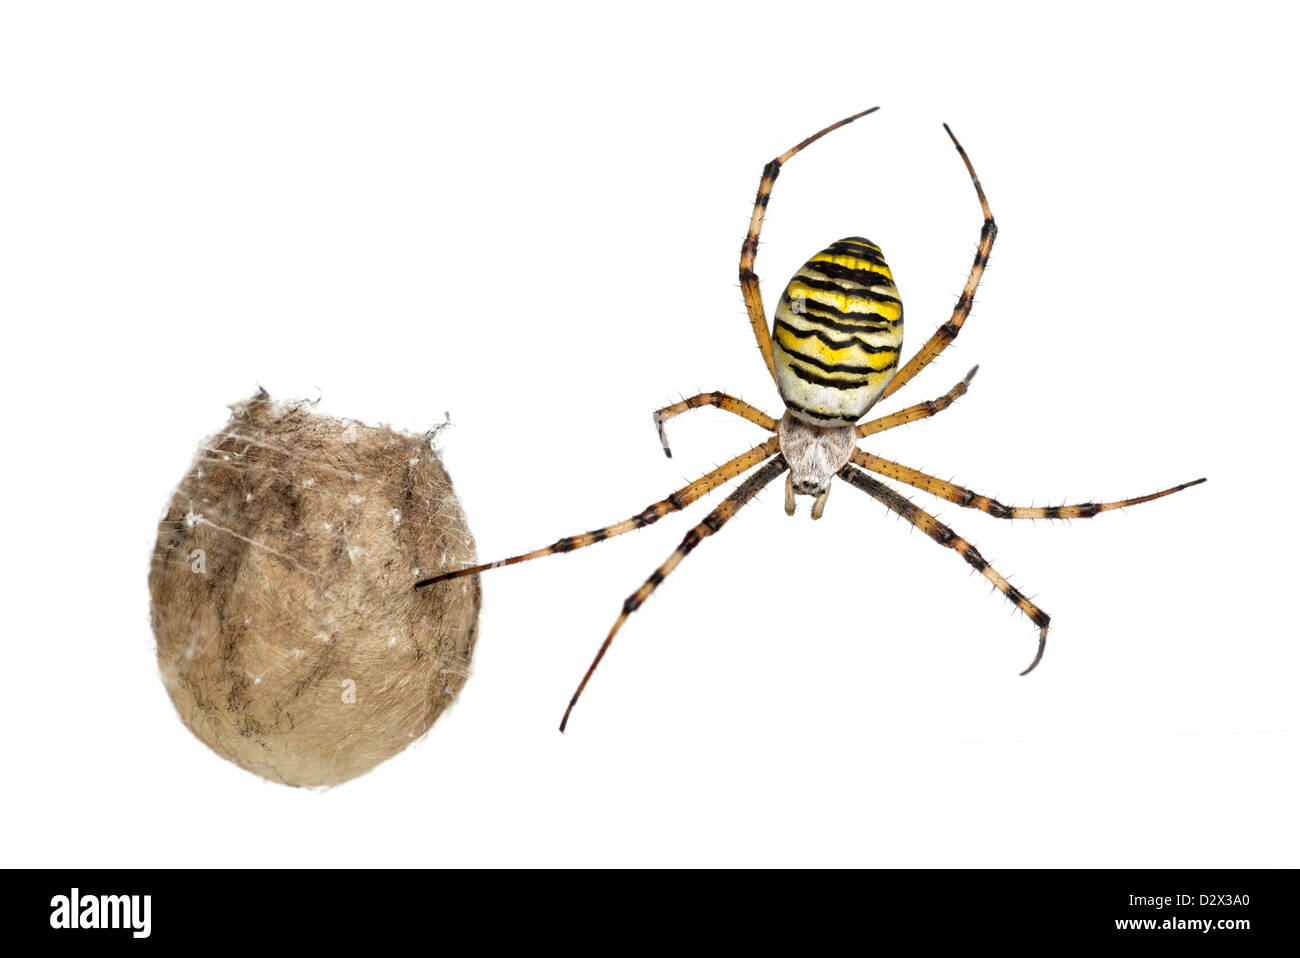 Wasp Spider, Argiope bruennichi, hanging next to its egg sack against white background Stock Photo